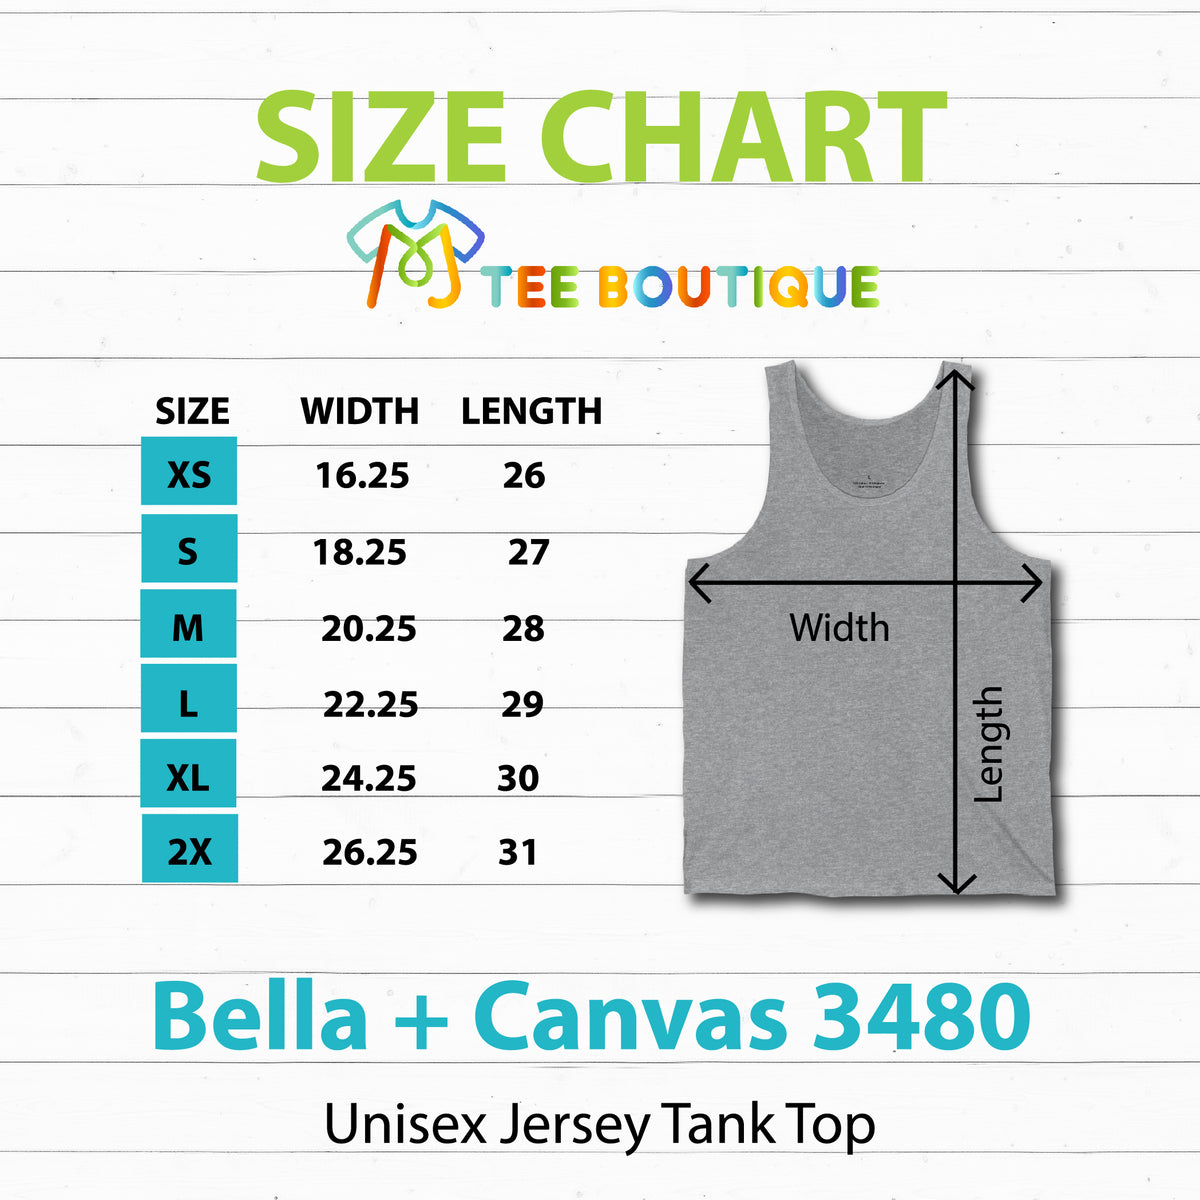 California Bear Surf Shirt | California Beach Bum Shirt | Retro Shirt | California Gifts | Unisex Jersey Tank Top